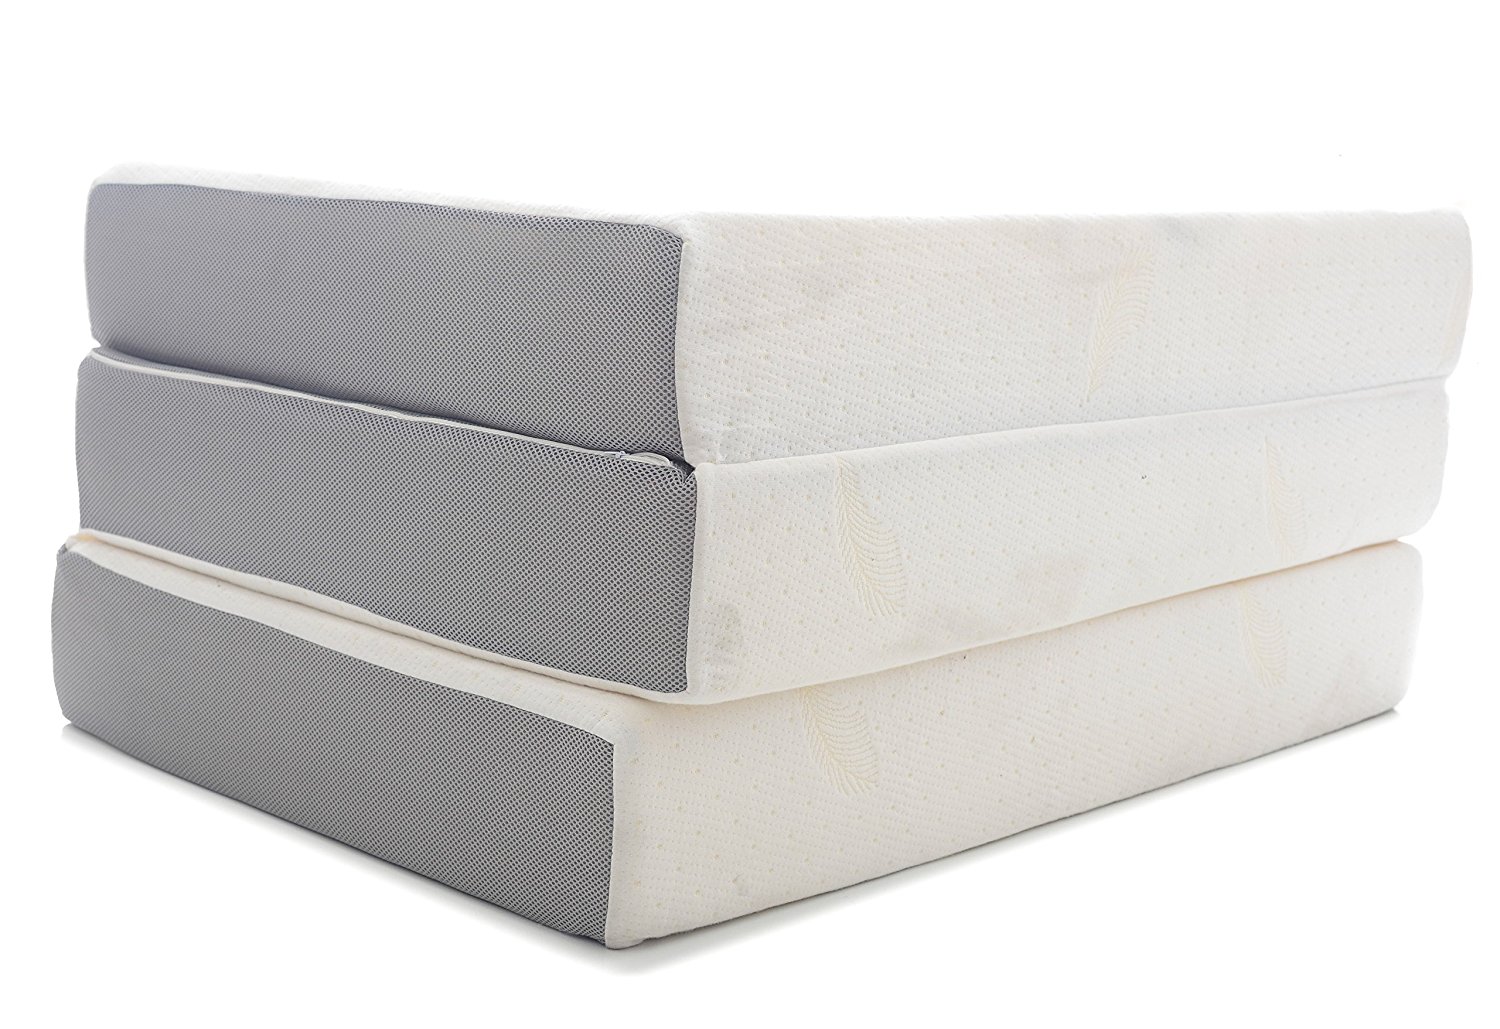 10 inch tri fold mattress